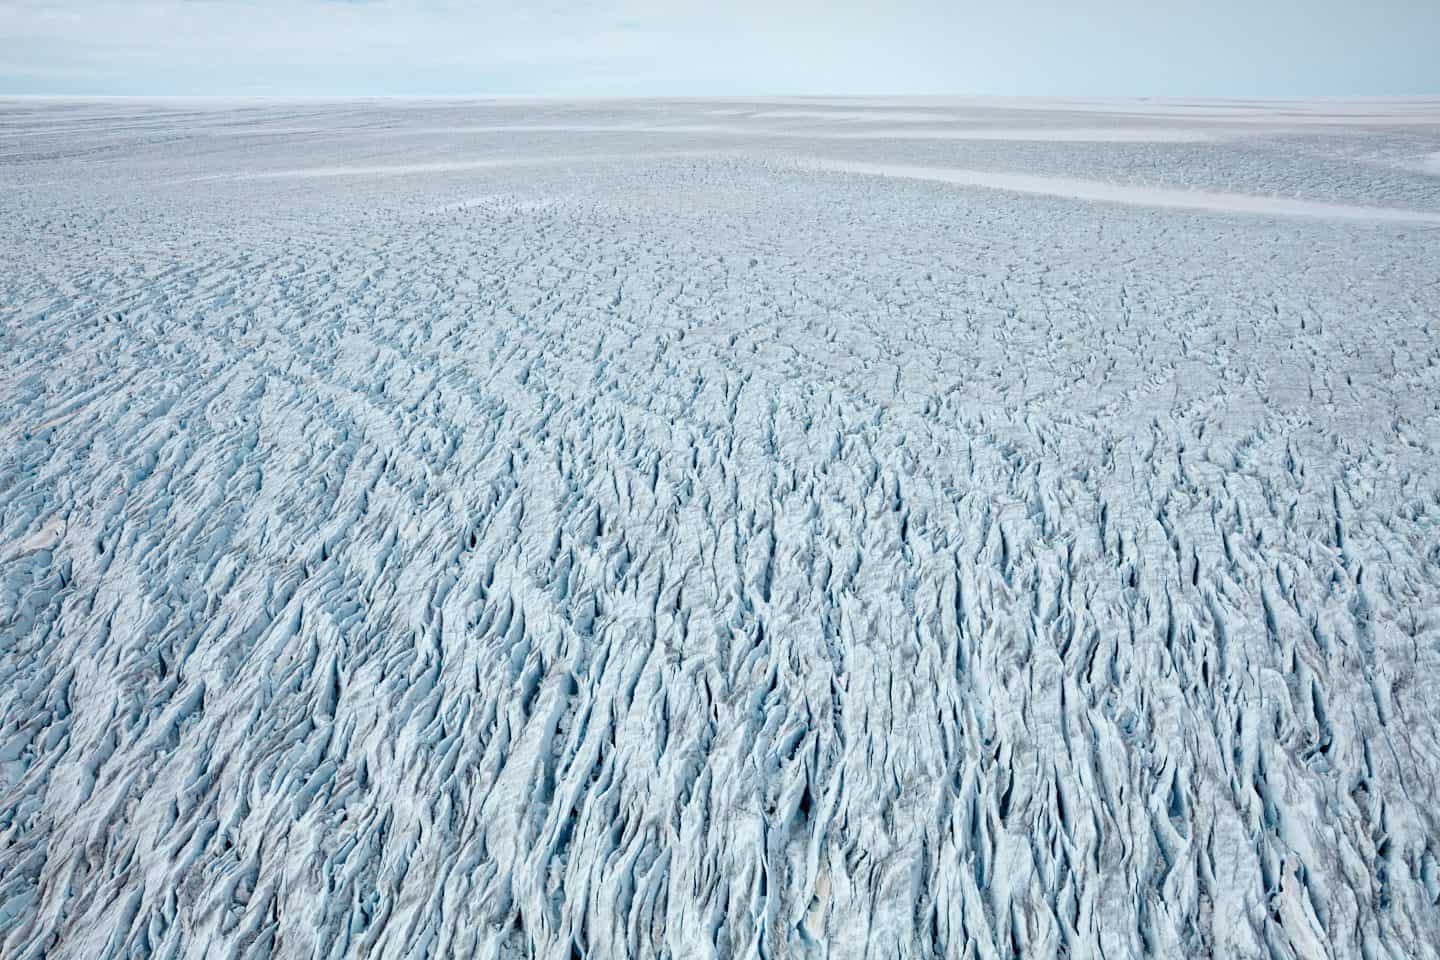 The Greenland Main Glacial Shelf